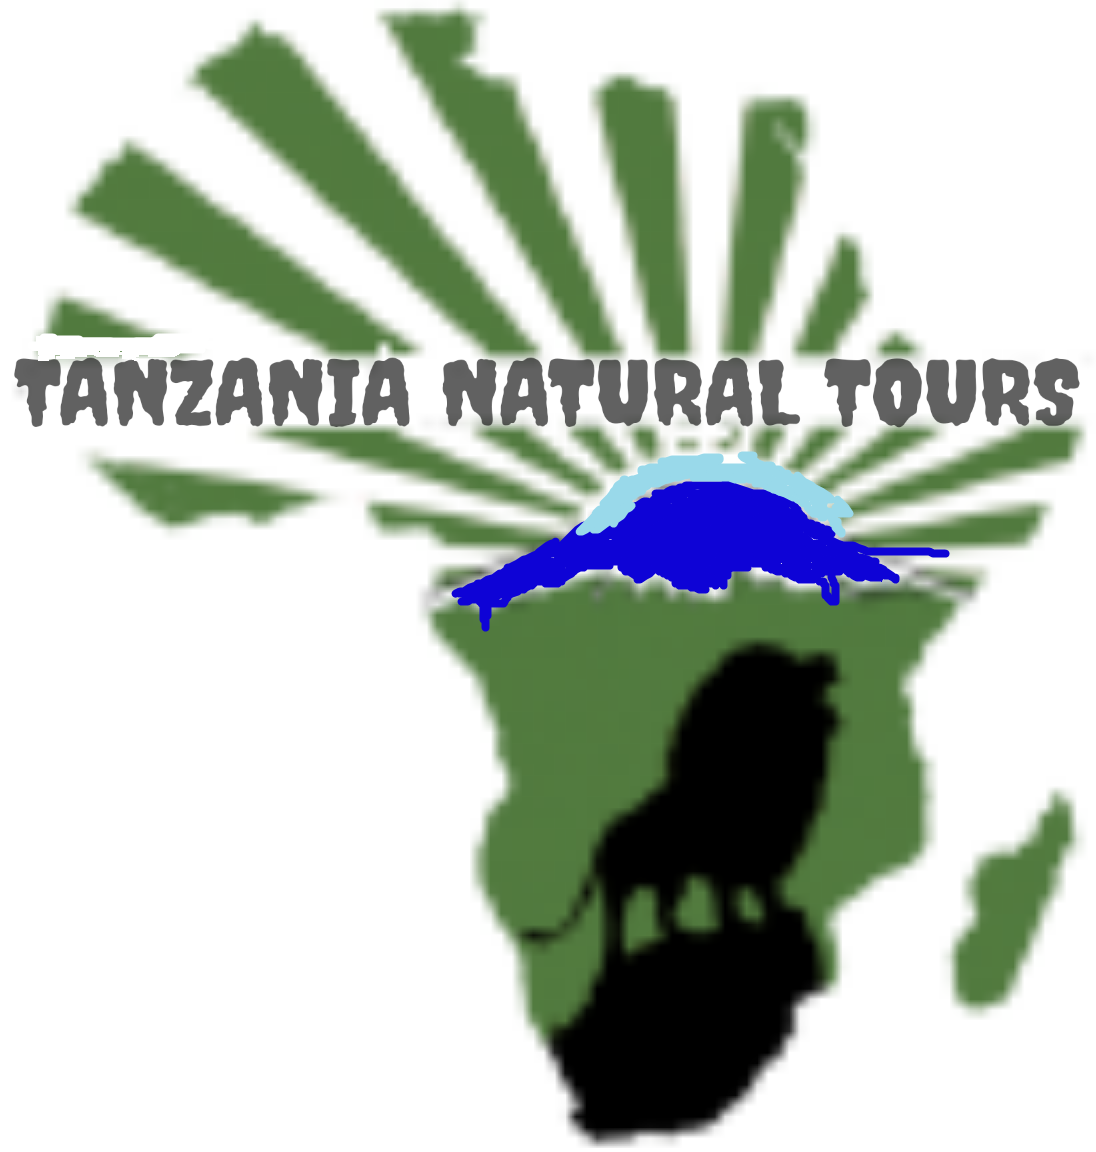 Zanzibar 9 days Honeymoon Beaches Holidays Packages,Kenya and zanzibar trip packages,Tanzania holiday packages